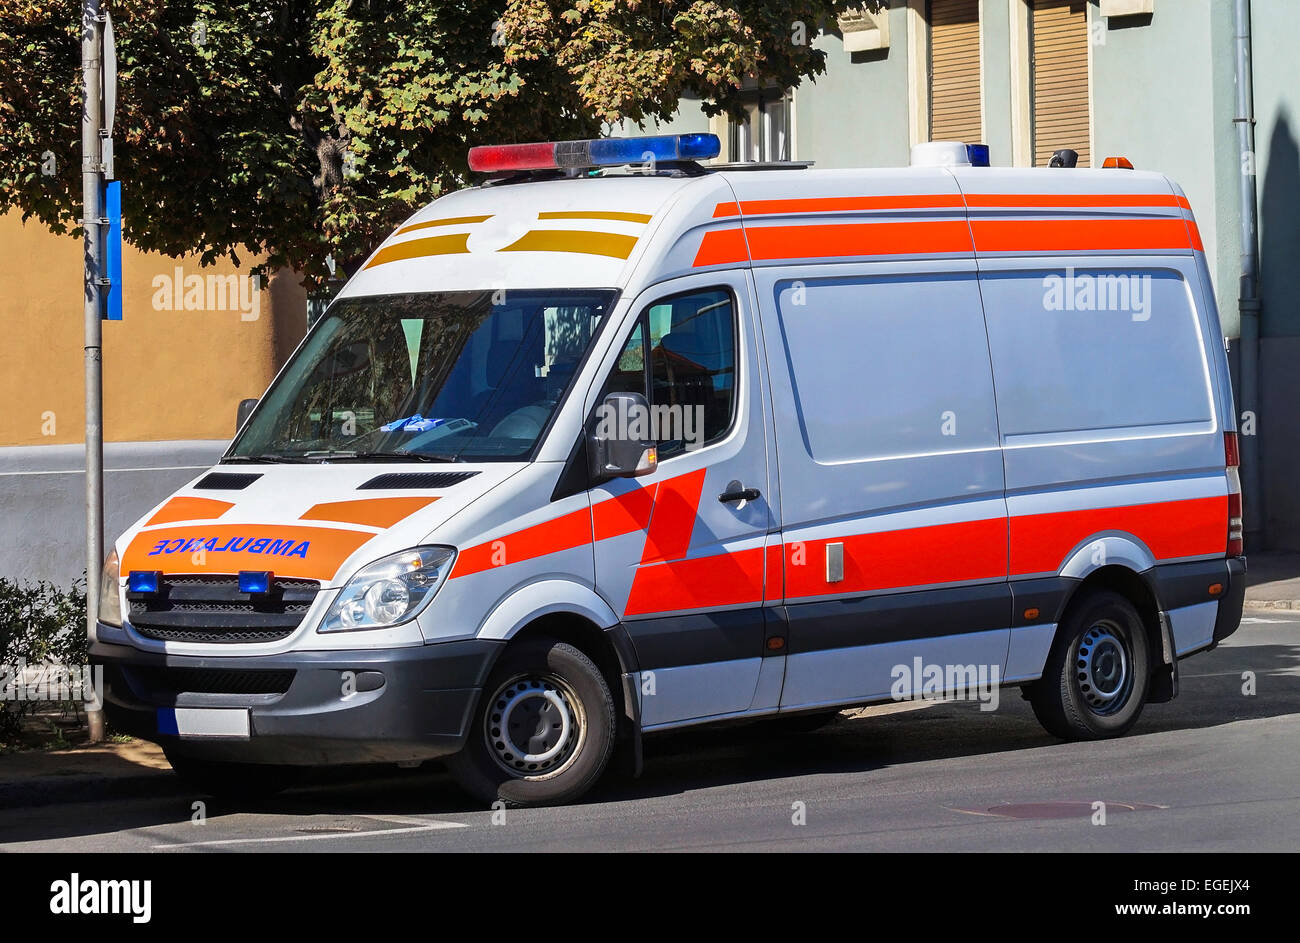 Ambulance on the street Stock Photo